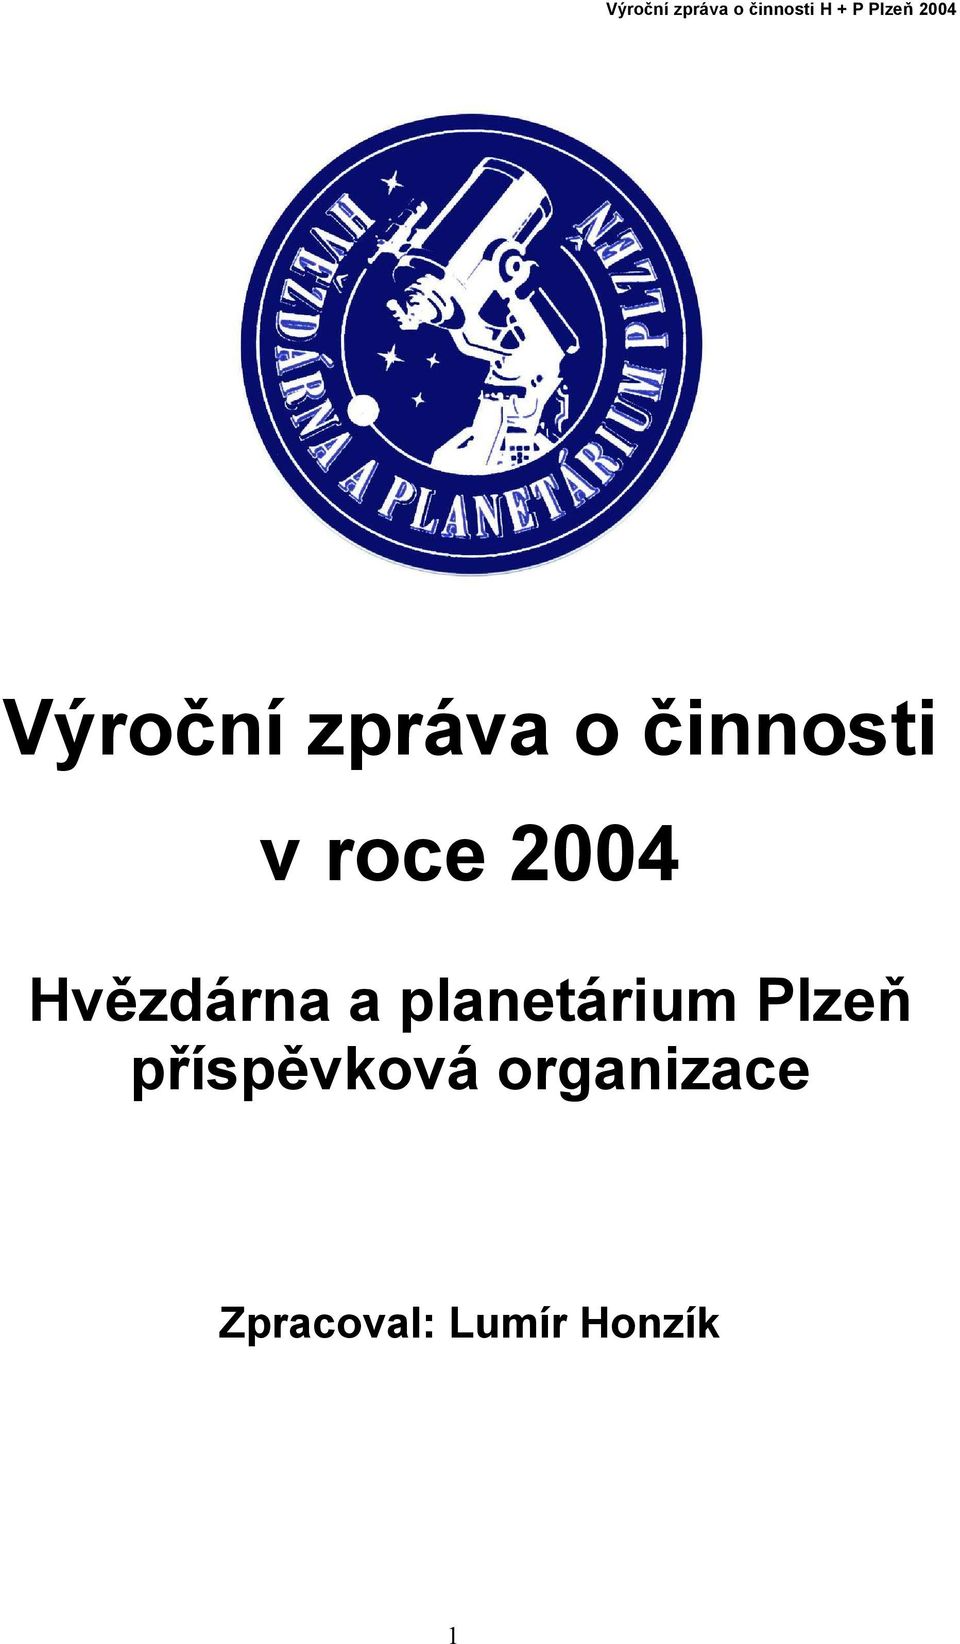 planetárium Plzeň